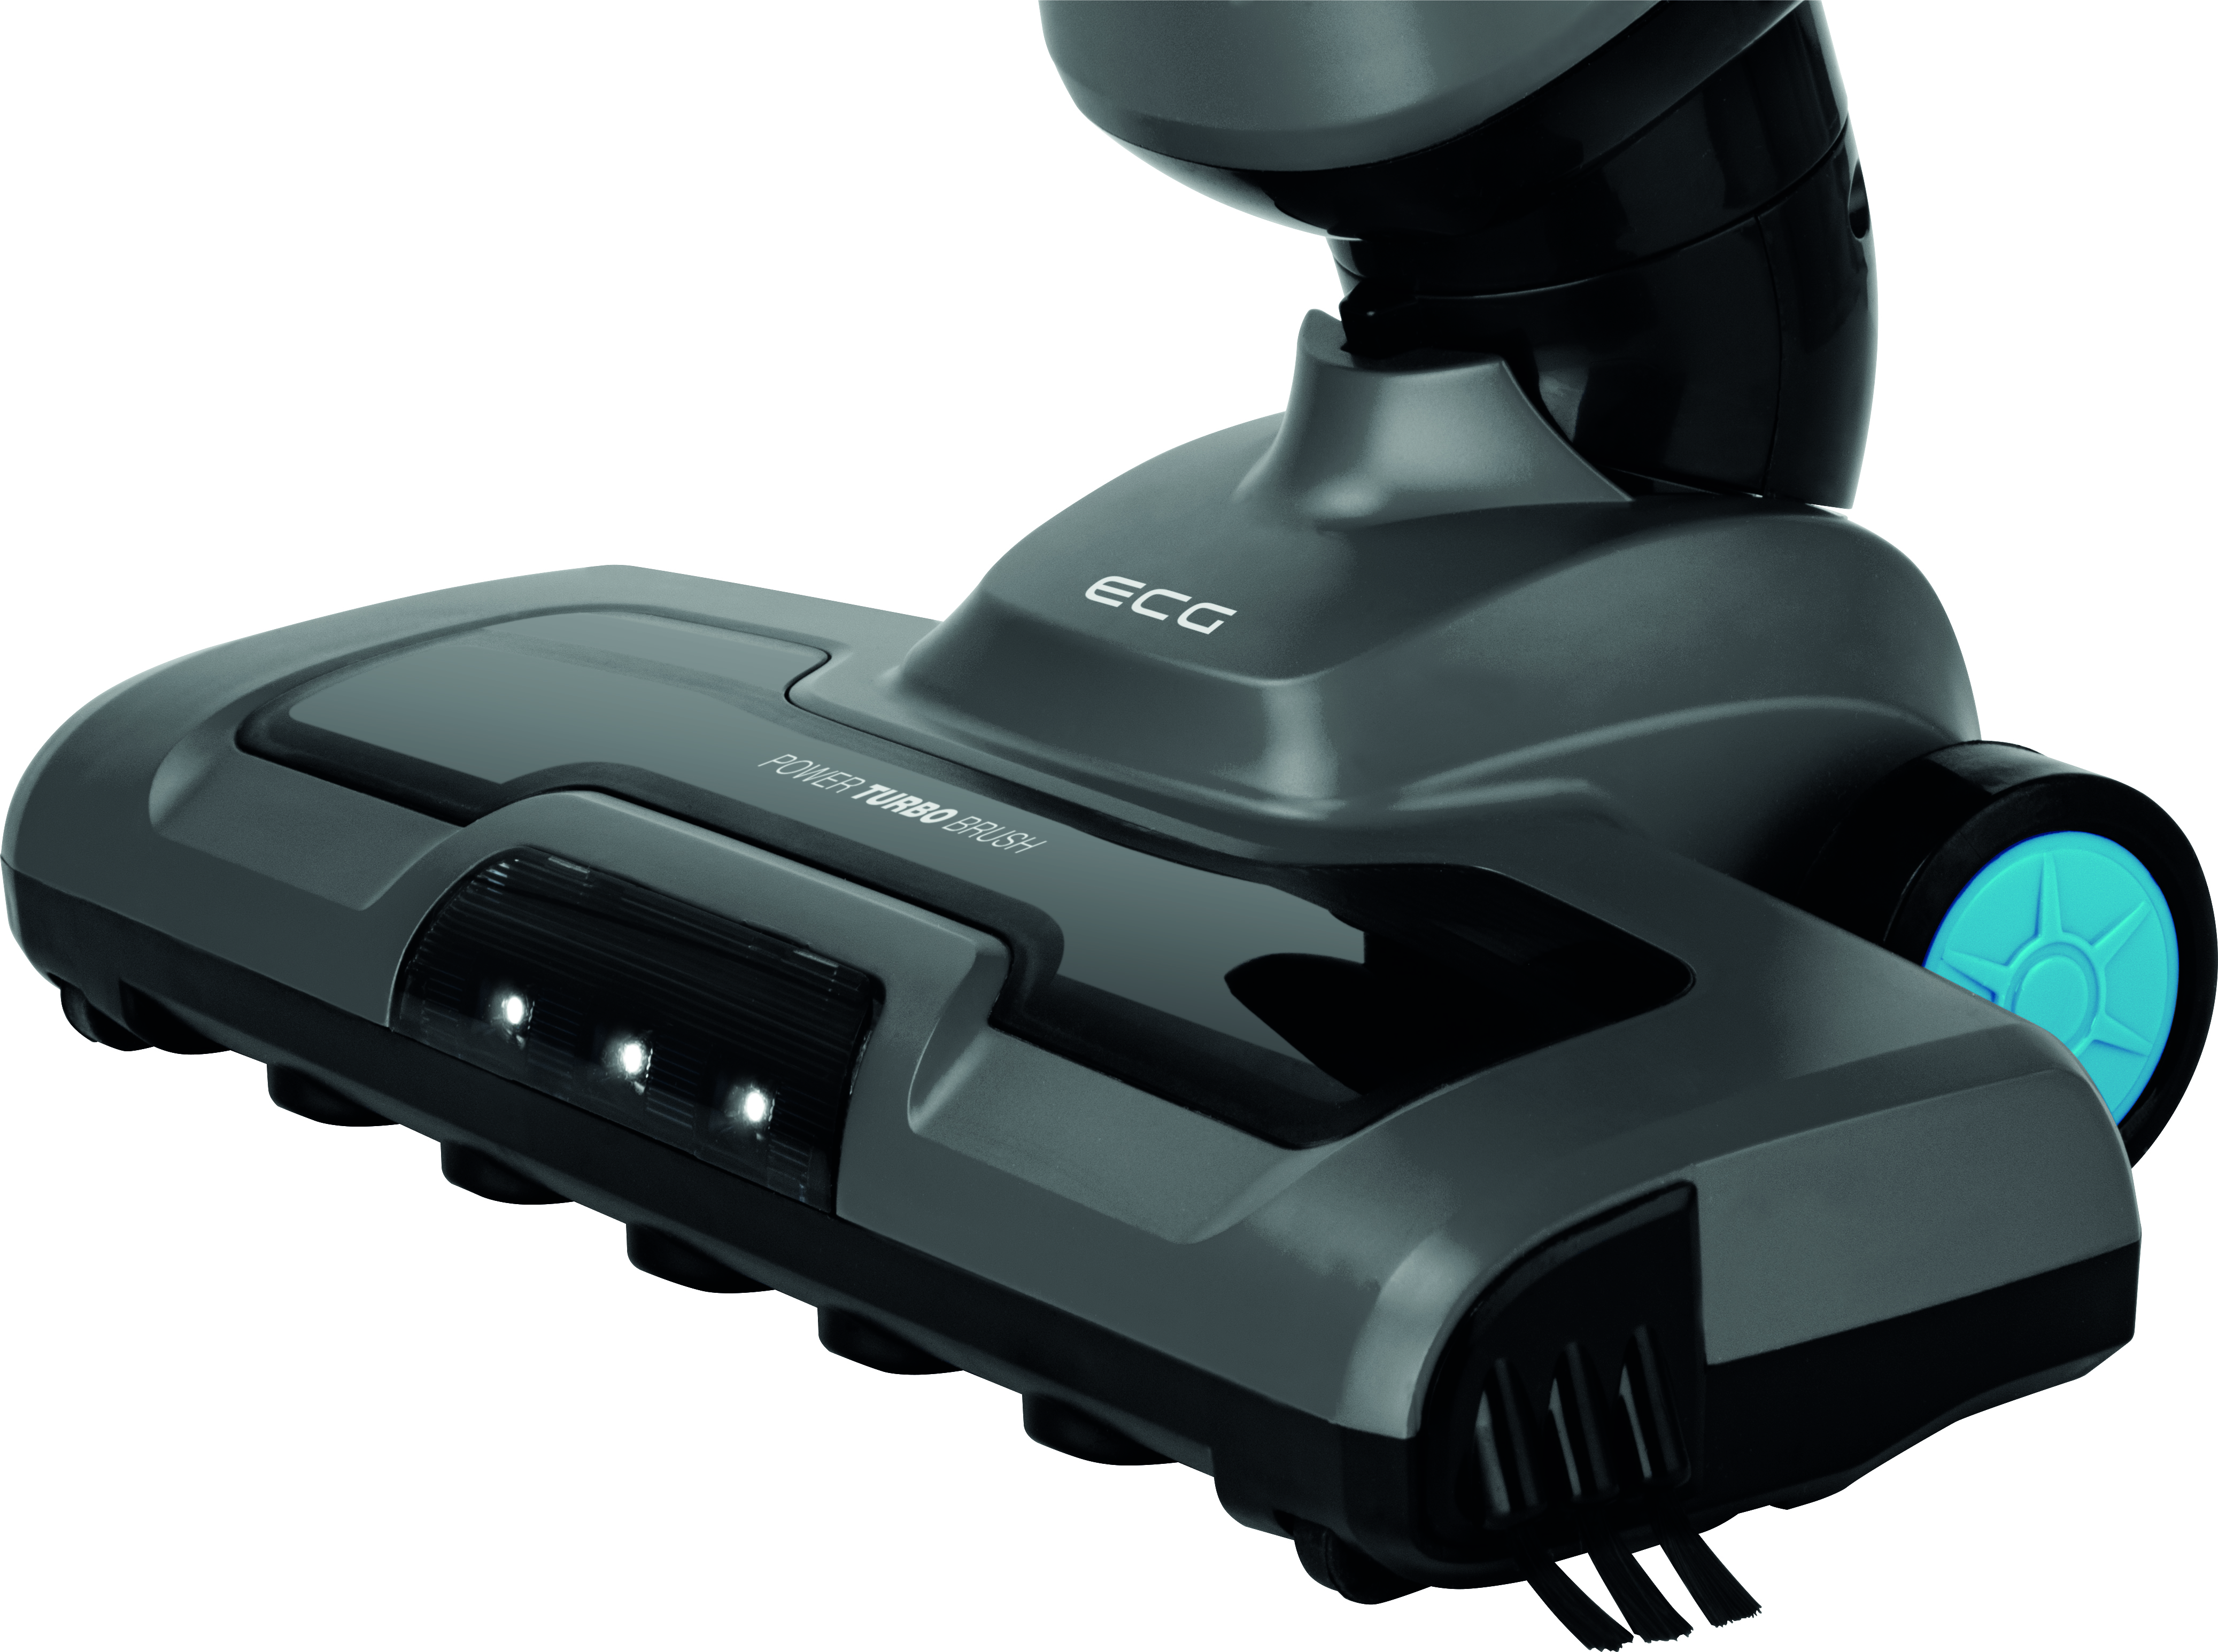 ECG VT 7220 | Staubsauger vacuum Leistung: Black) Watt, Akkubetrieb | Hand | maximale cleaners, 17